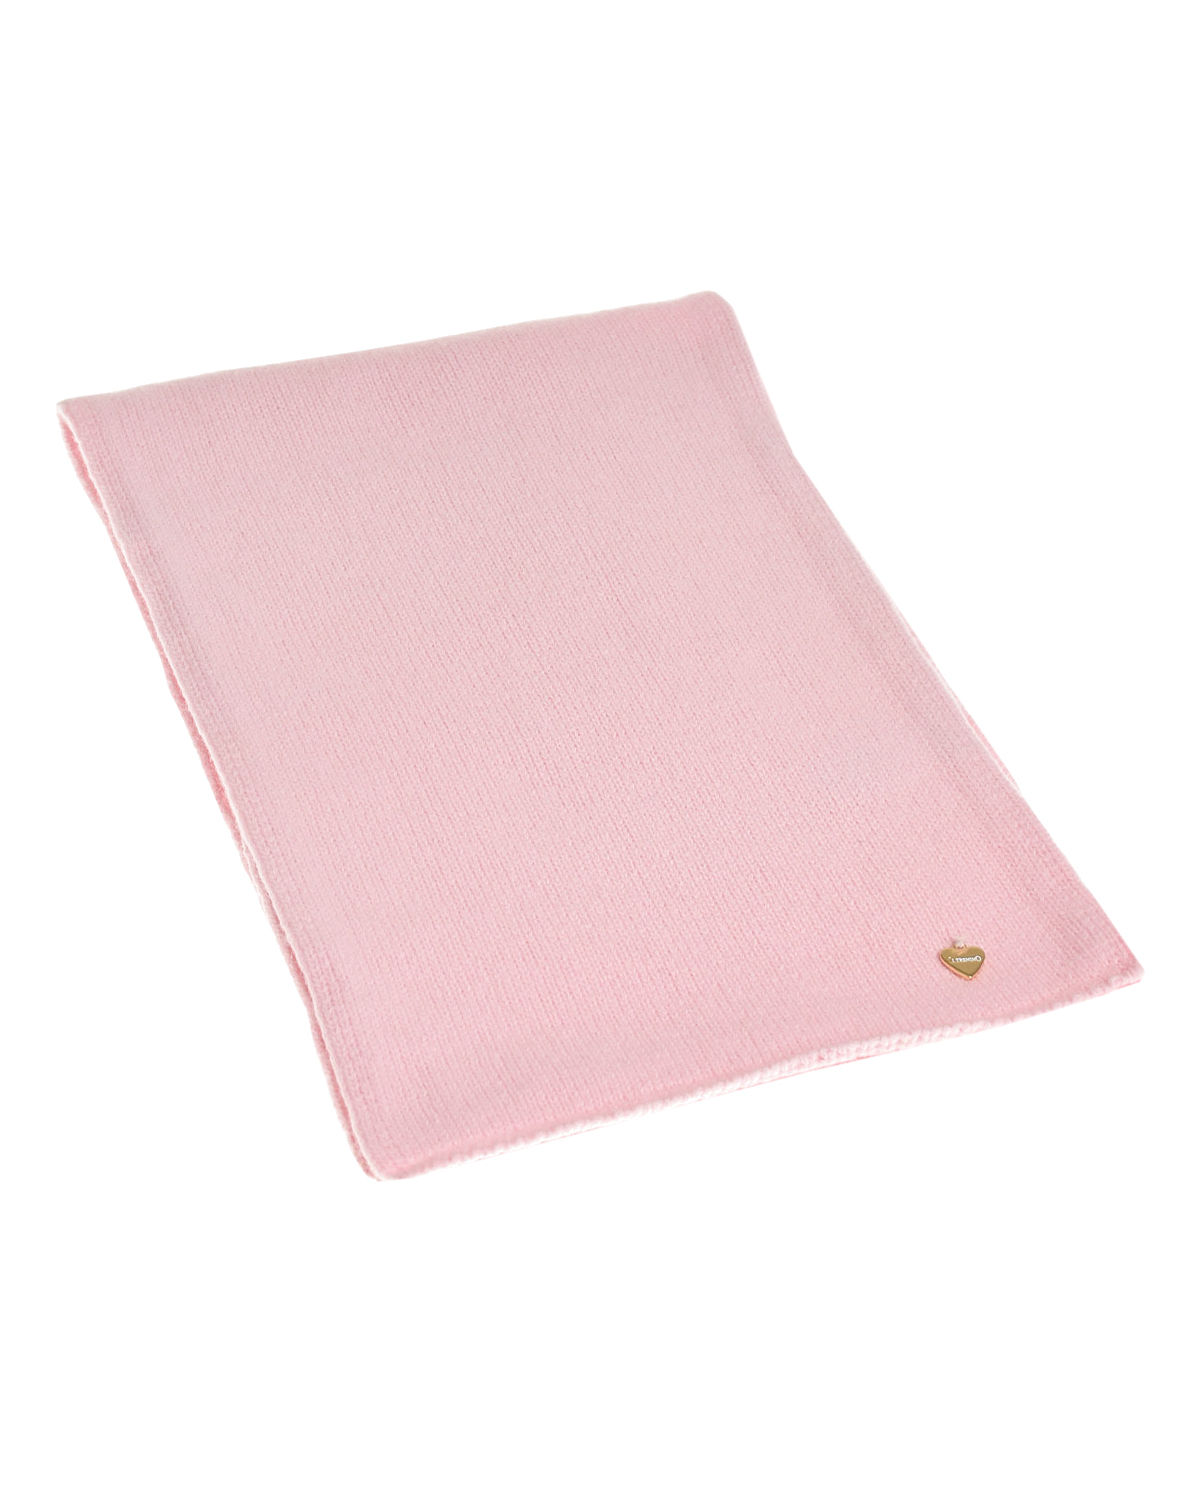 Розовый шарф из шерсти и кашемира Il Trenino детский, размер unica - фото 1